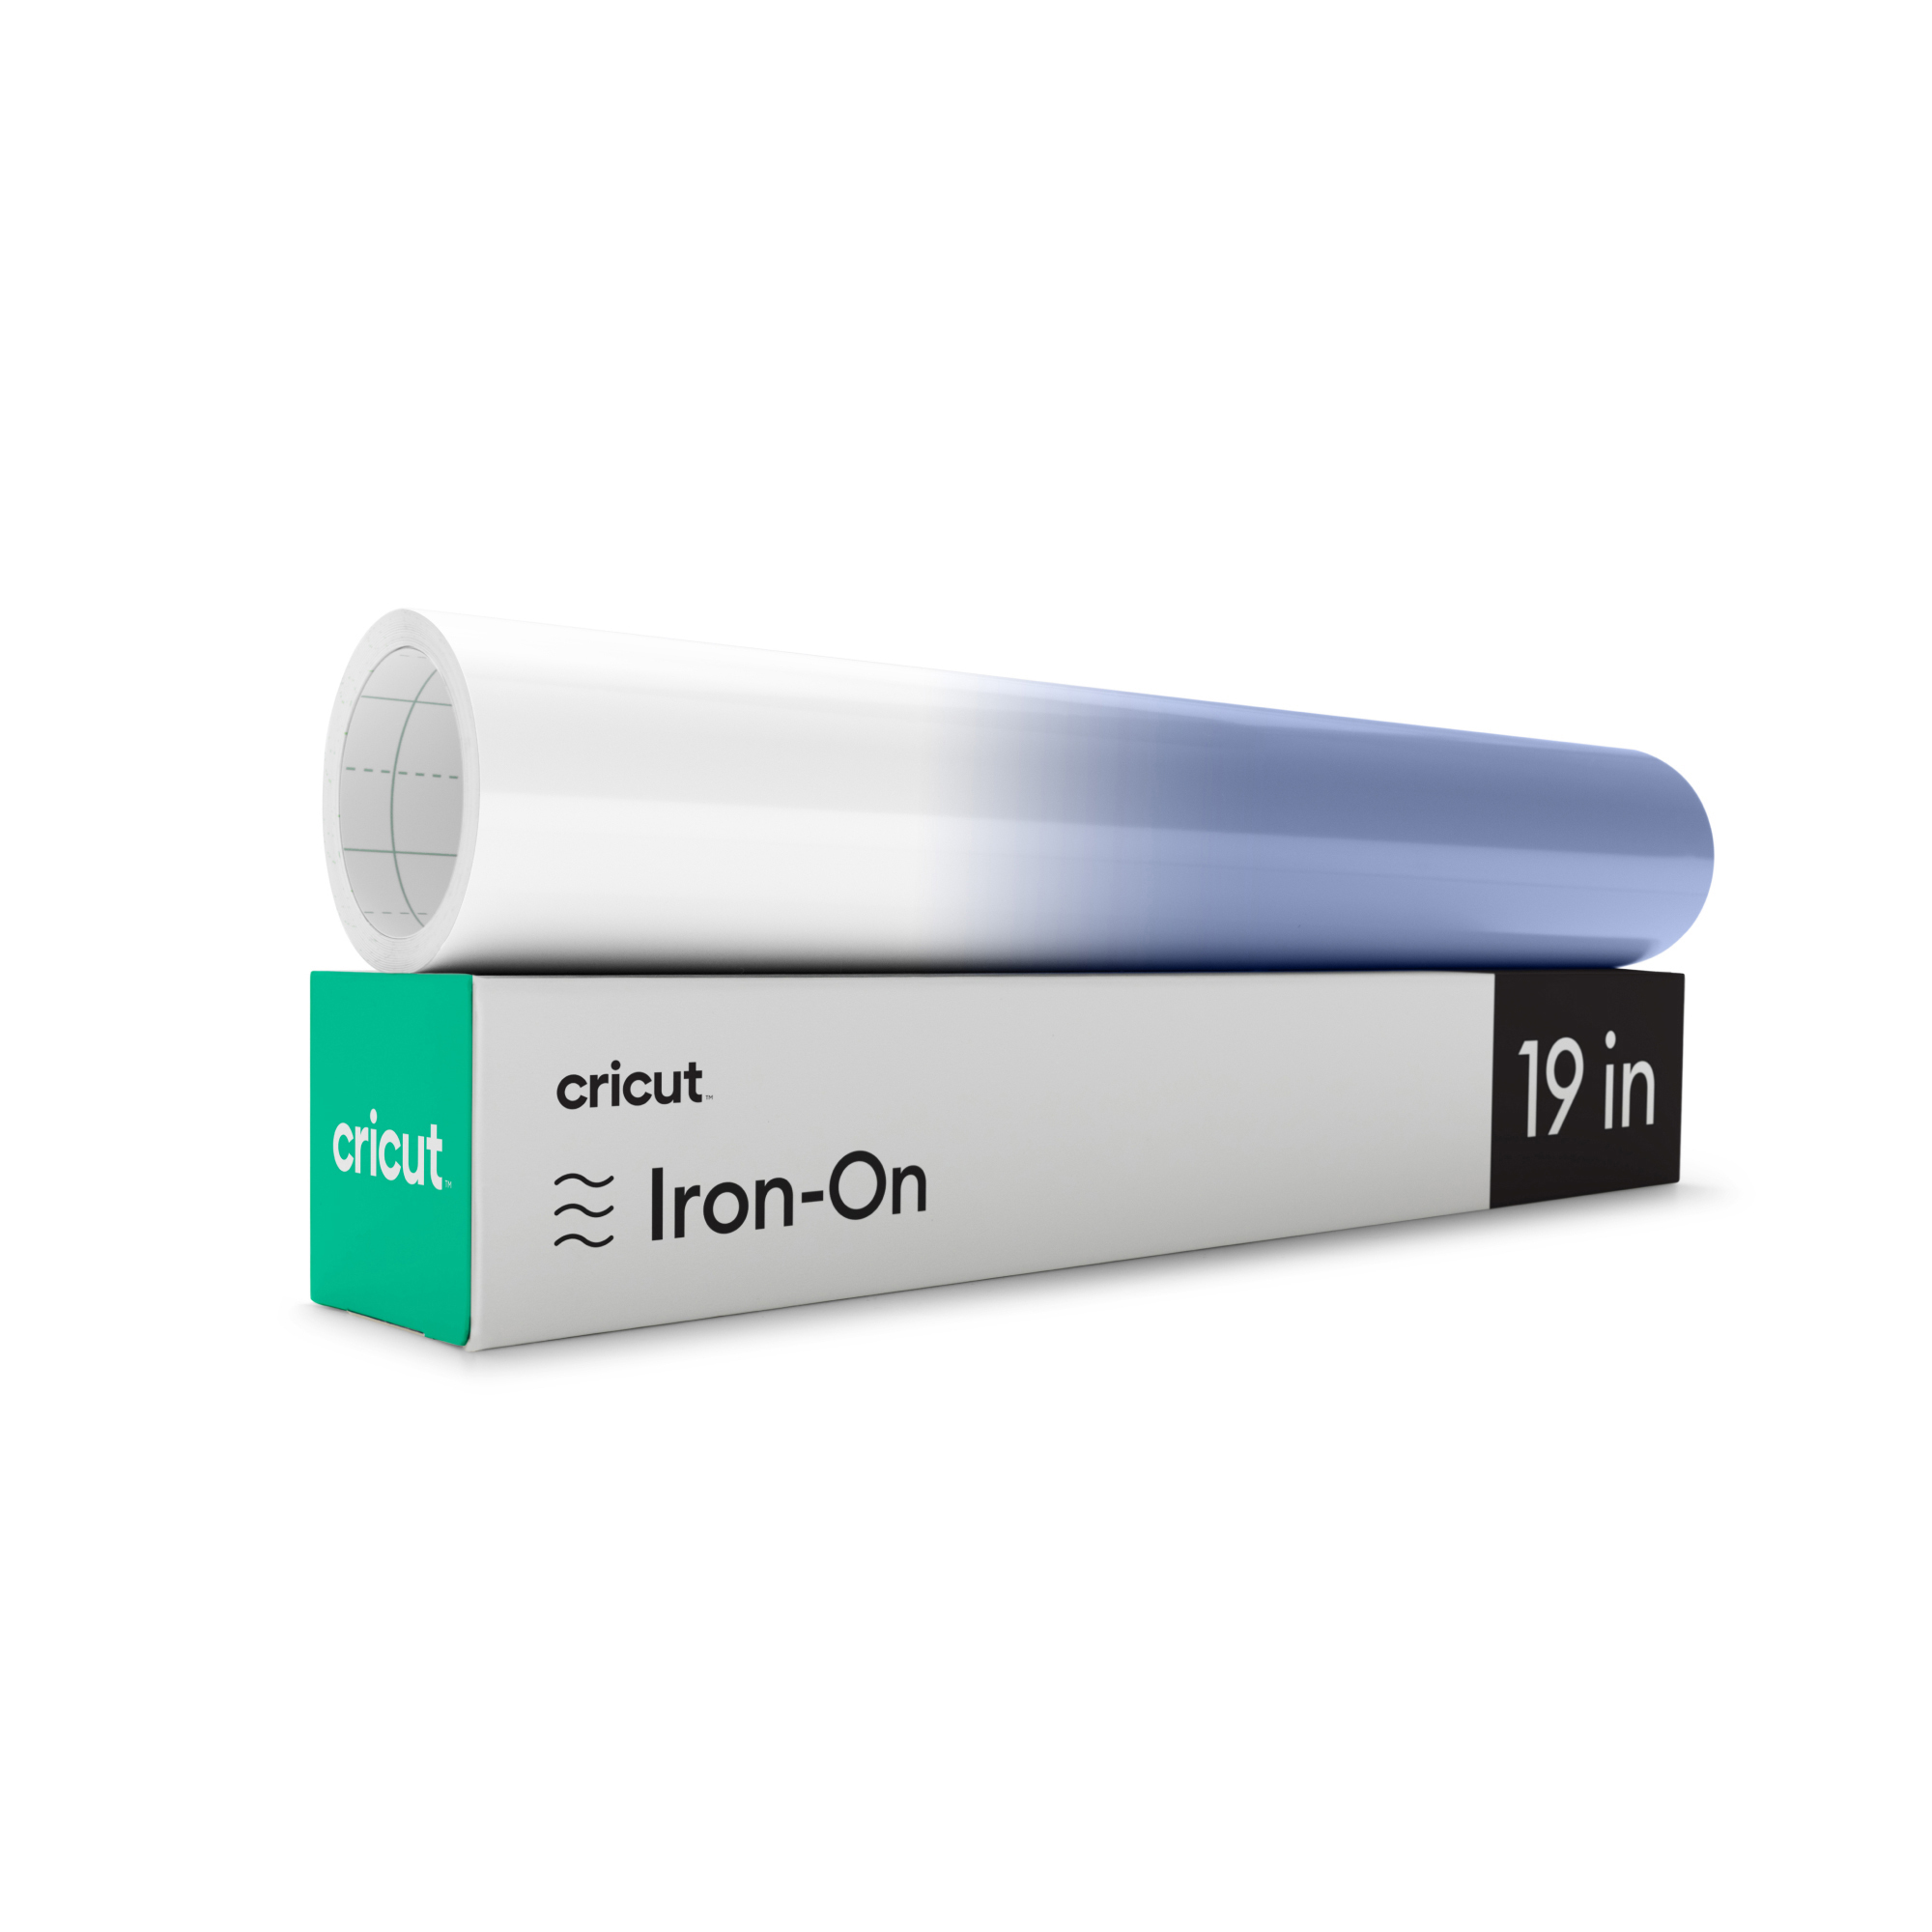 Iron-On CRICUT Blue UV-aktivierte Bügelfolie